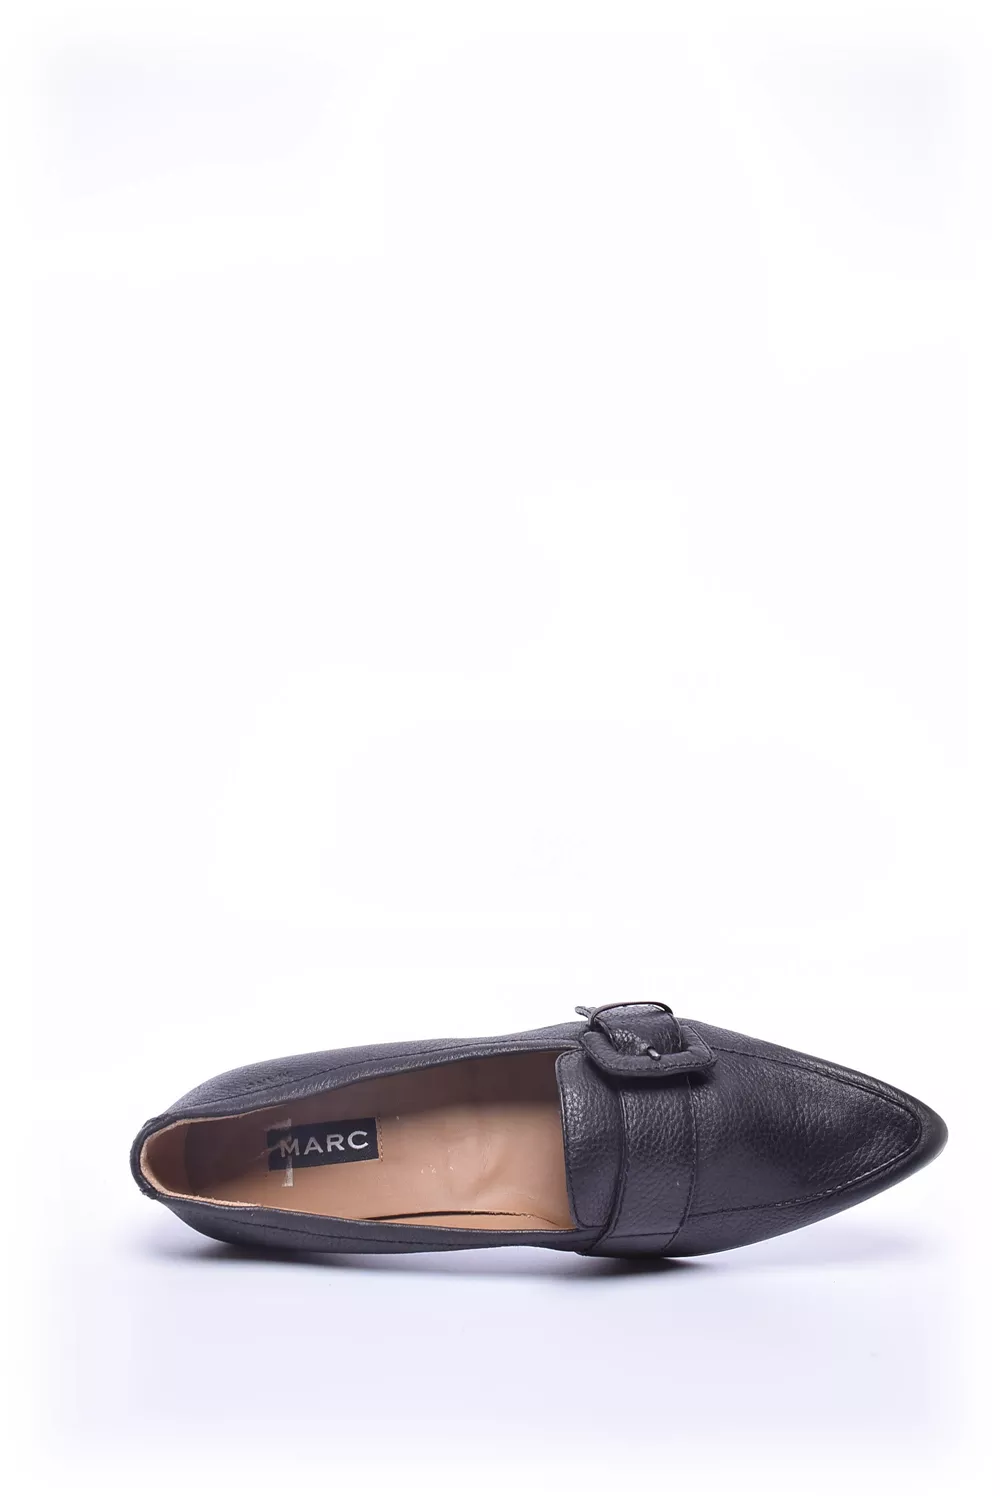 Pantofi stiletto dama [4]